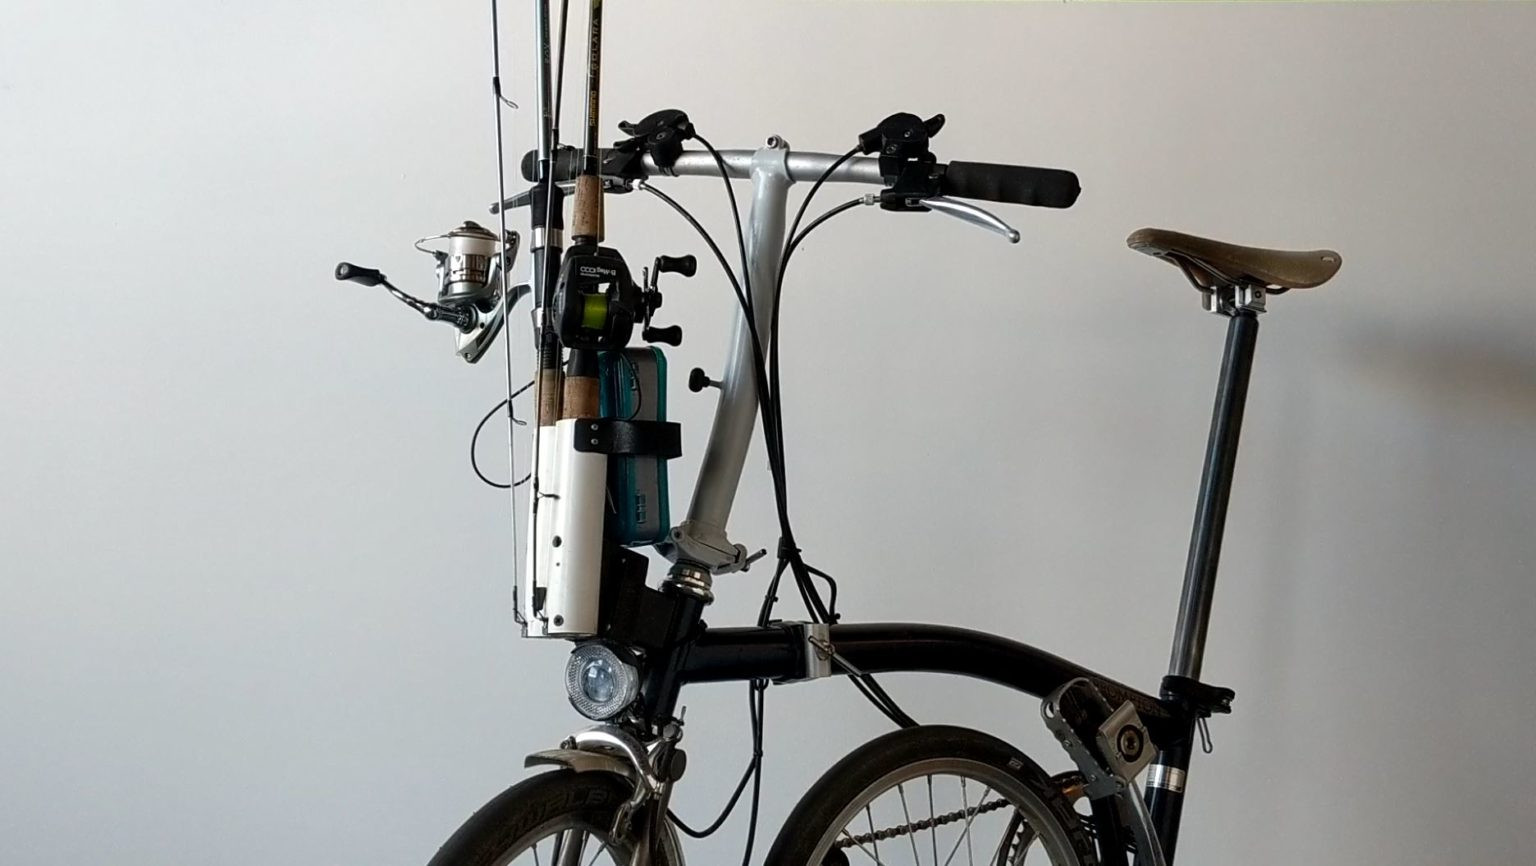 Hack A Folding Bike To Help You Catch Some Pike - Hackaday